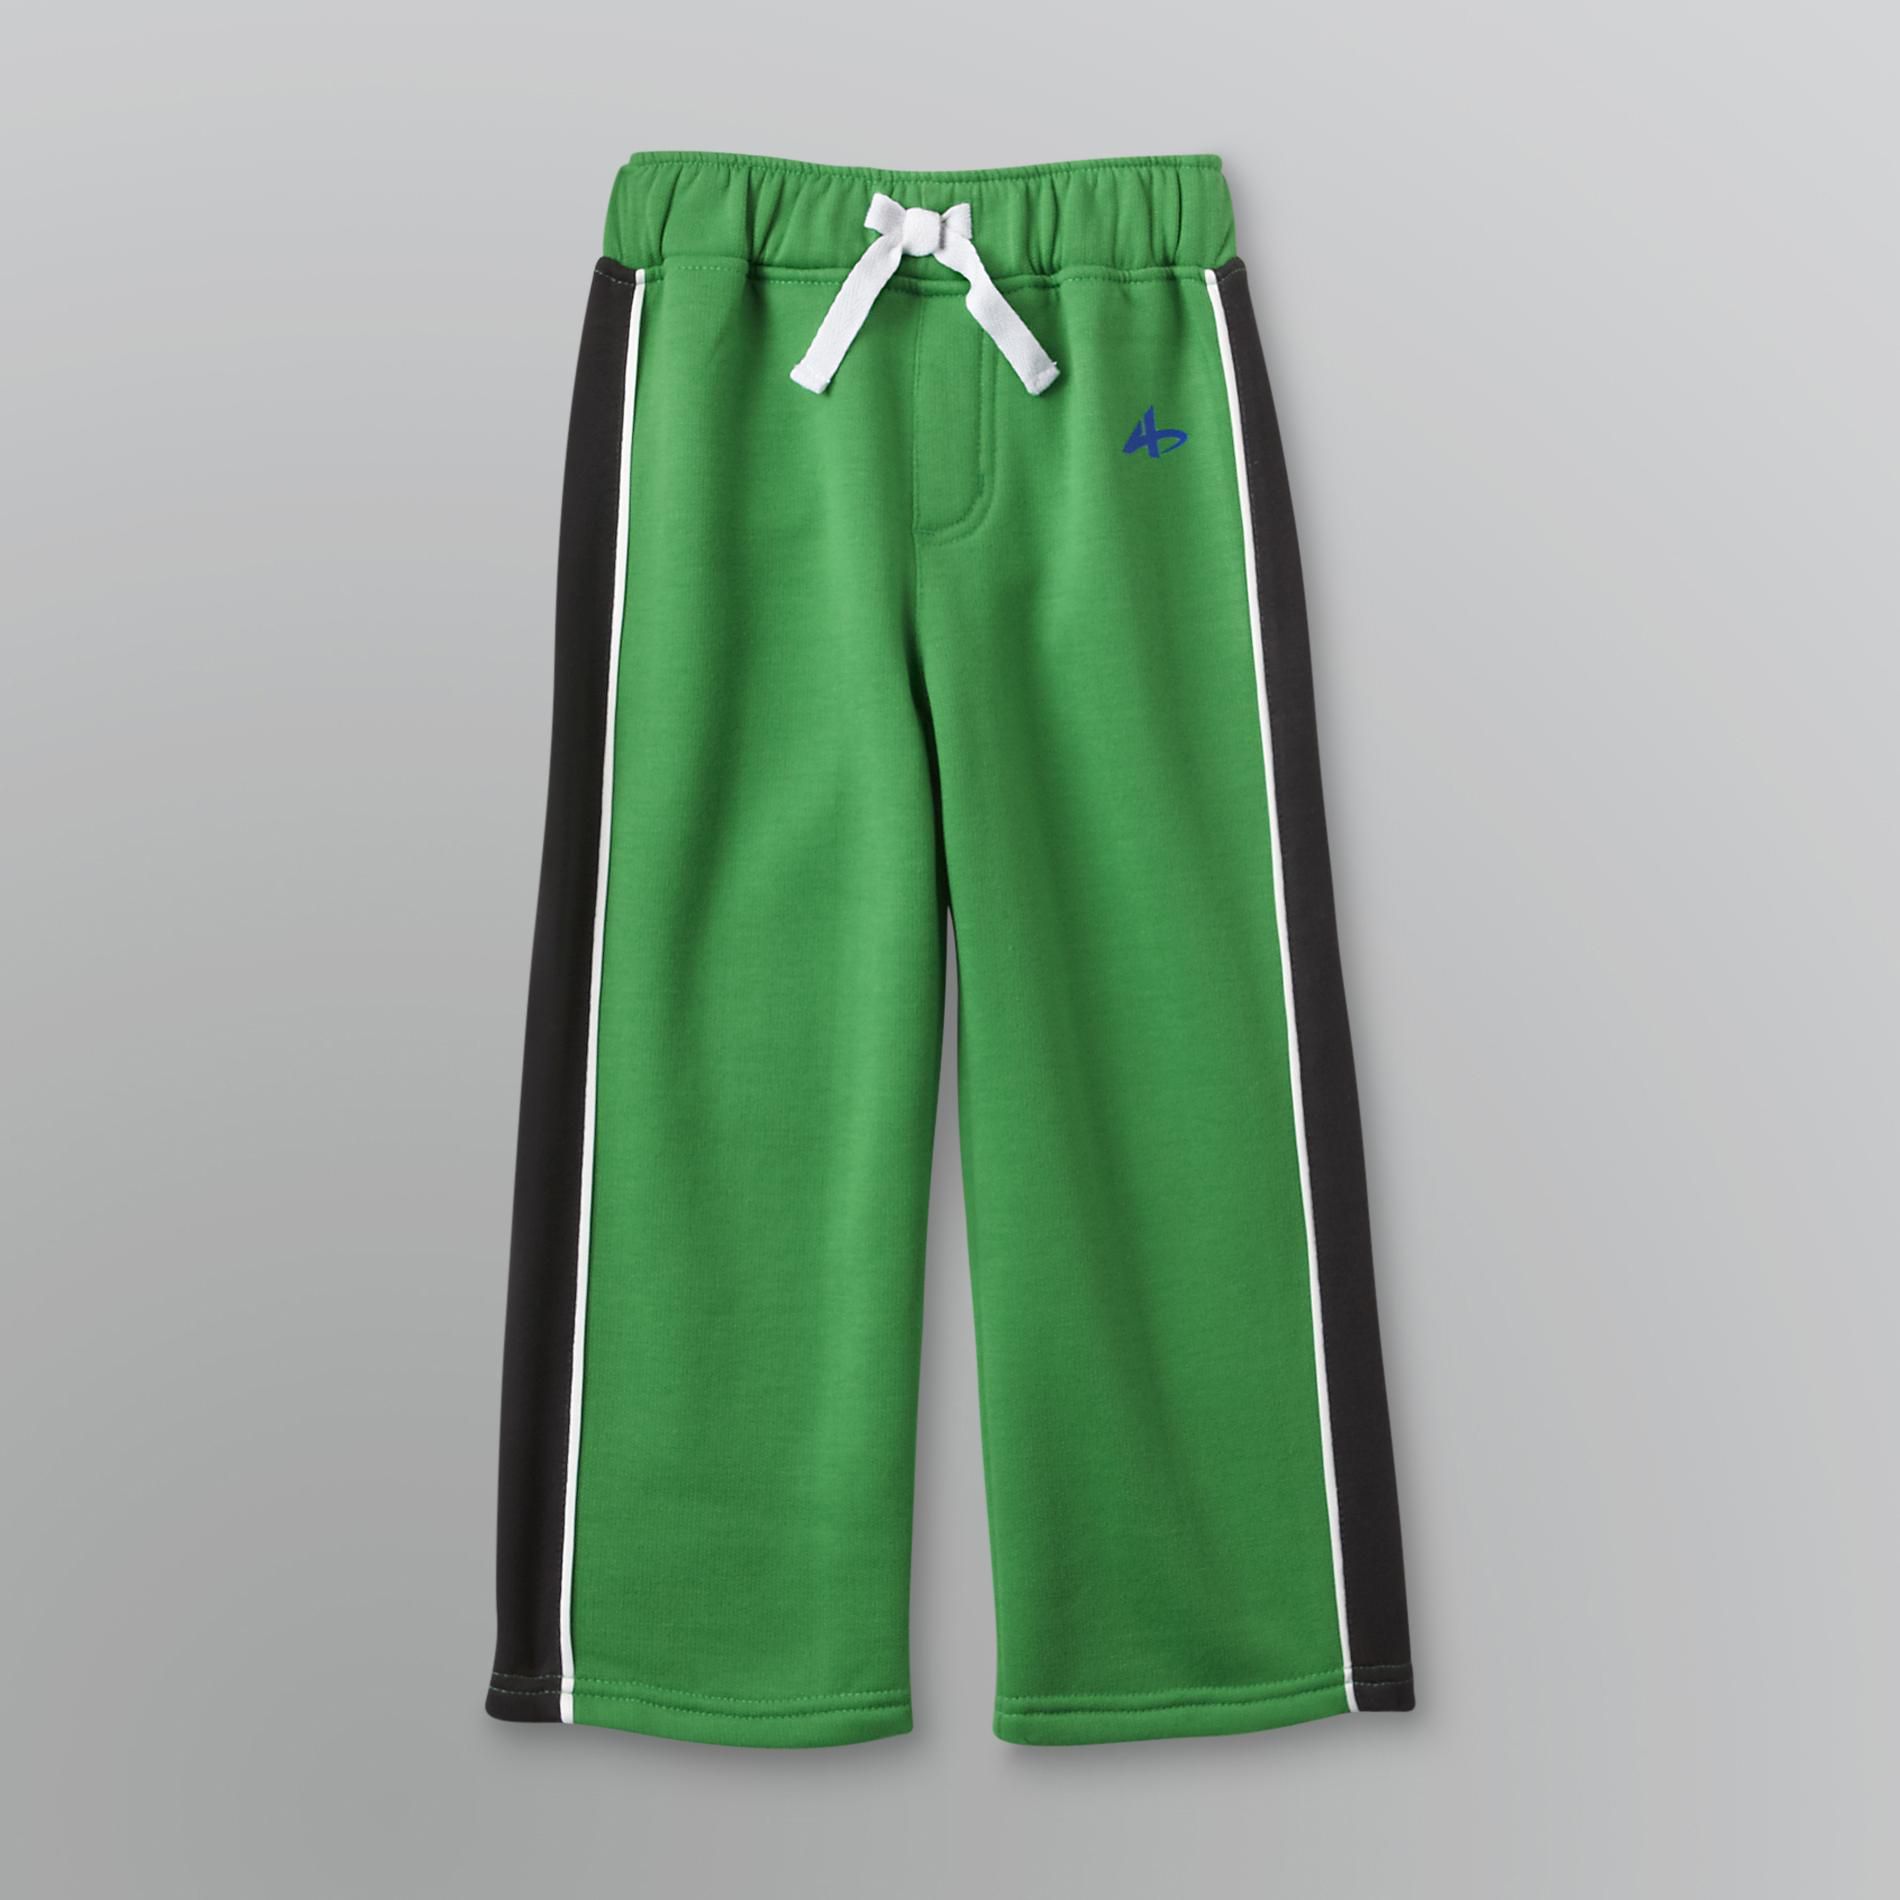 Athletech Toddler Boy's Knit Pants